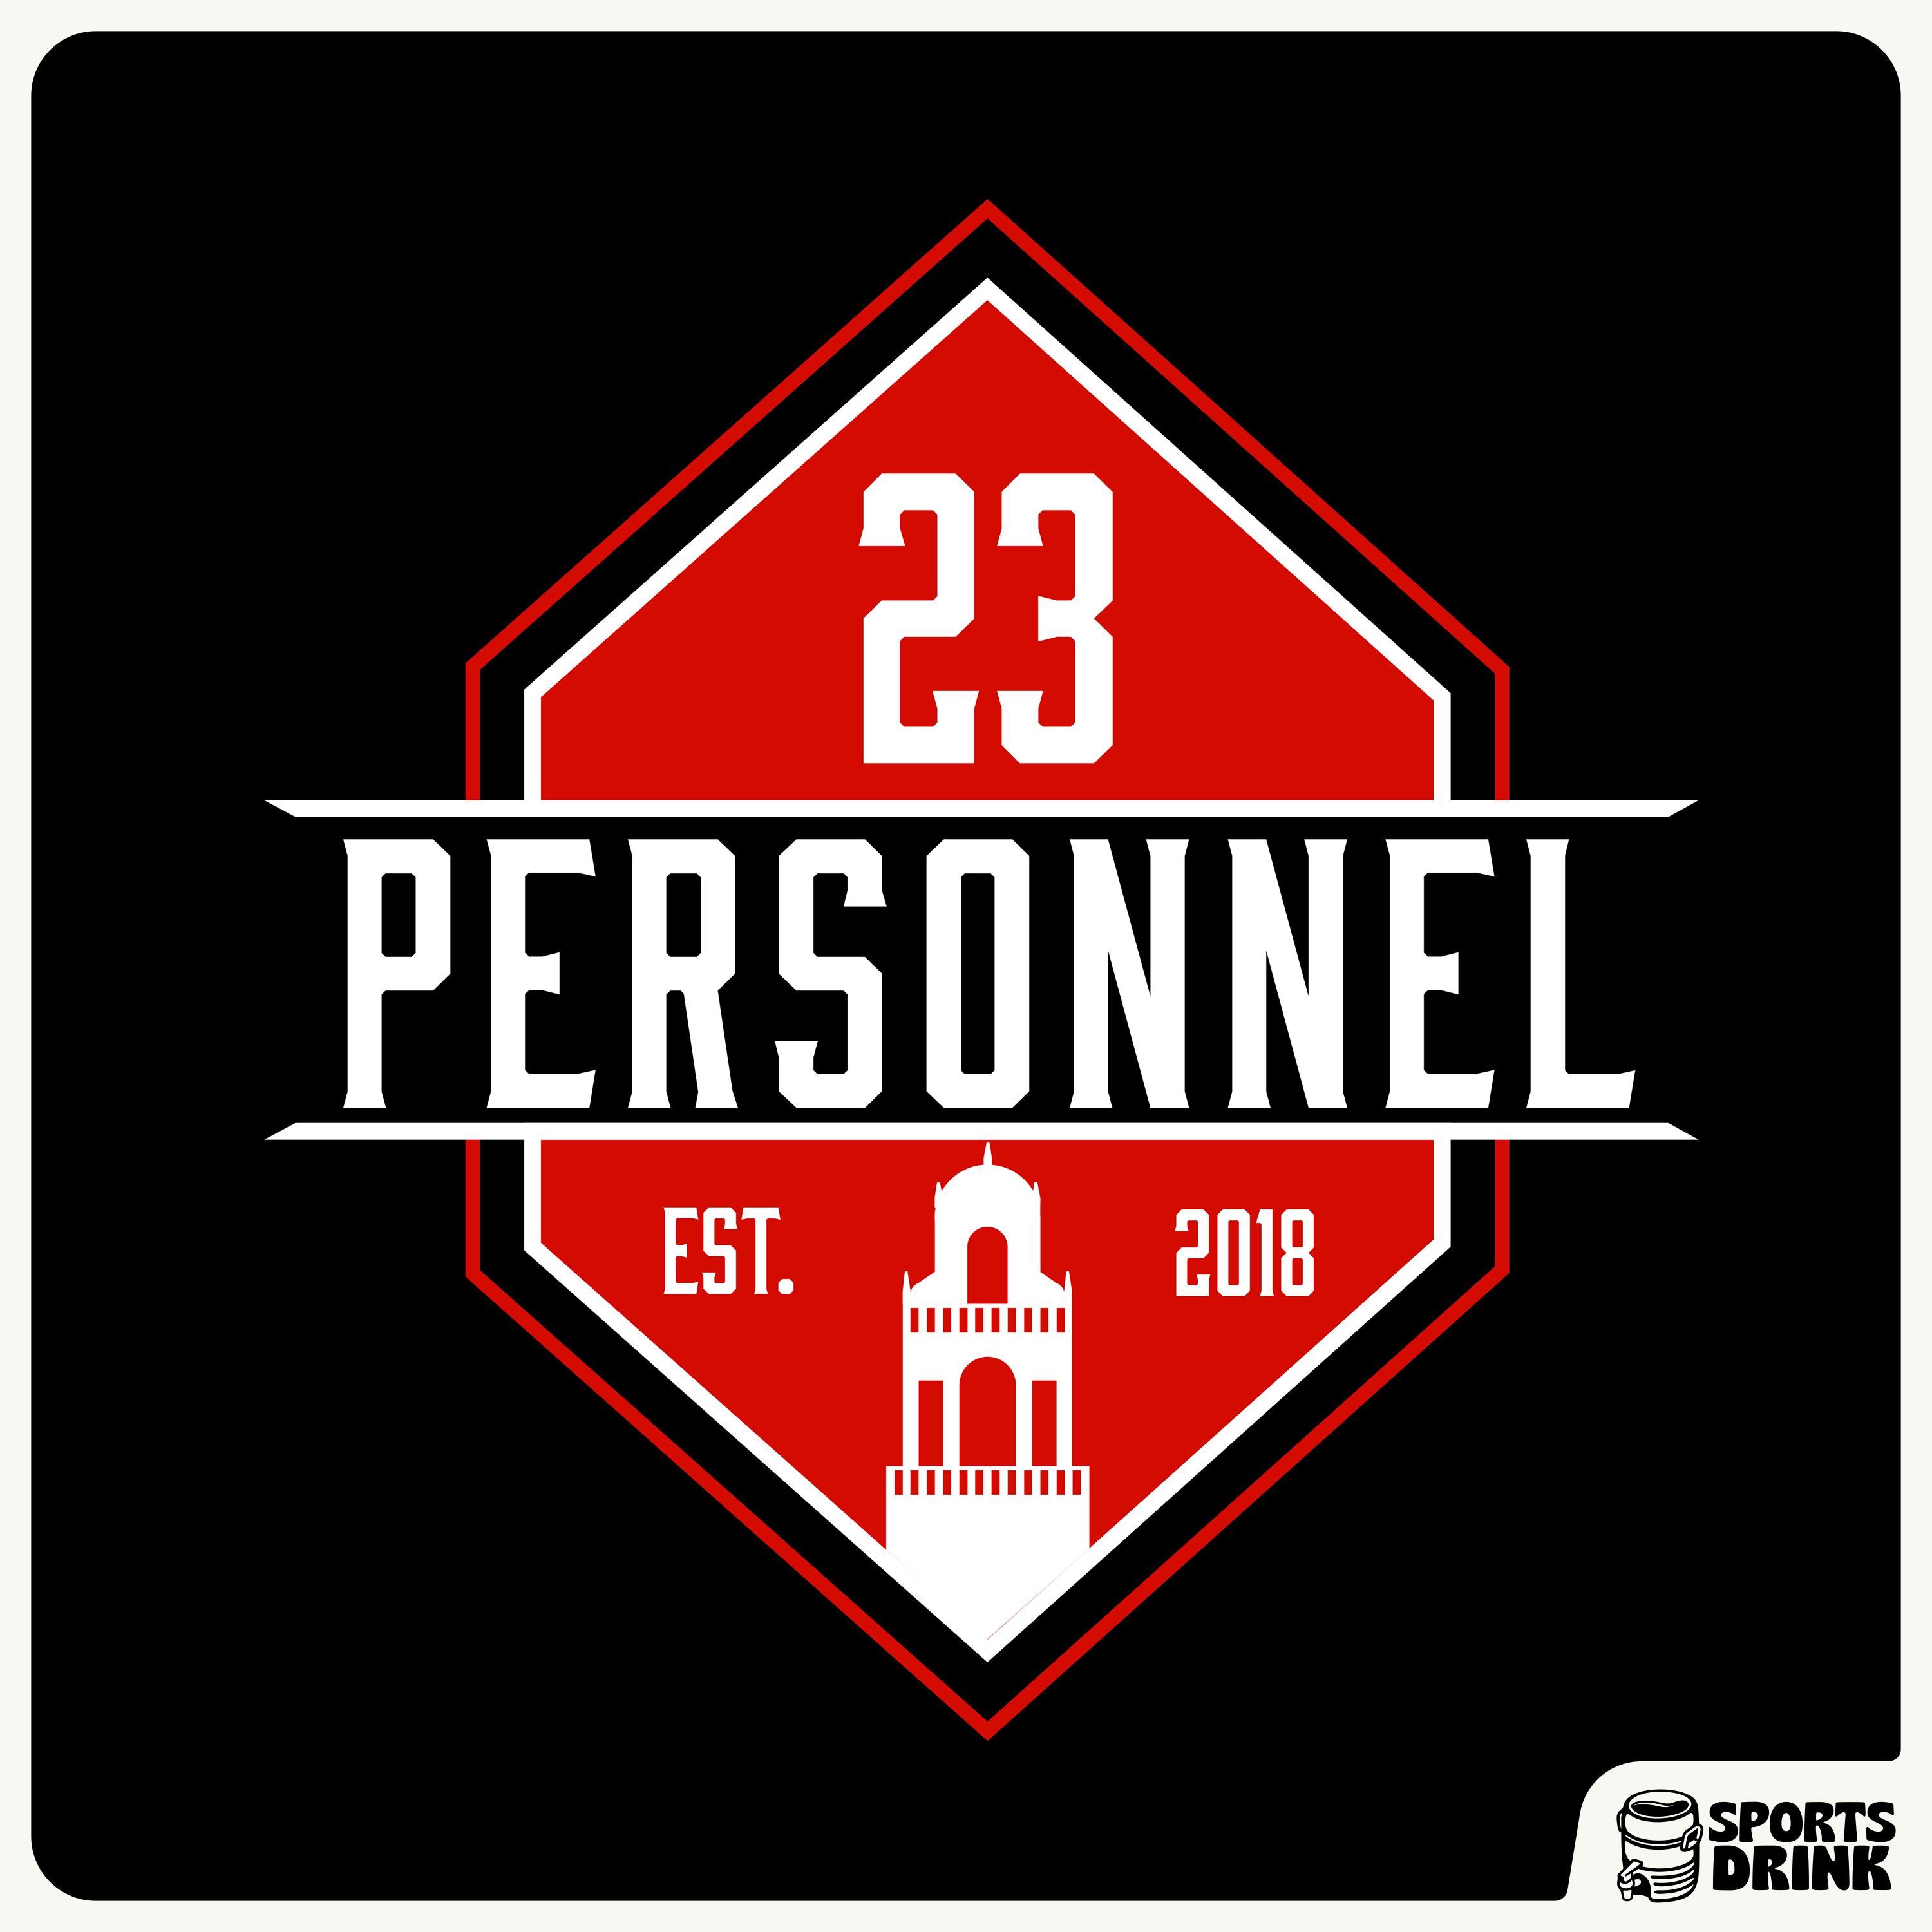 23 Personnel